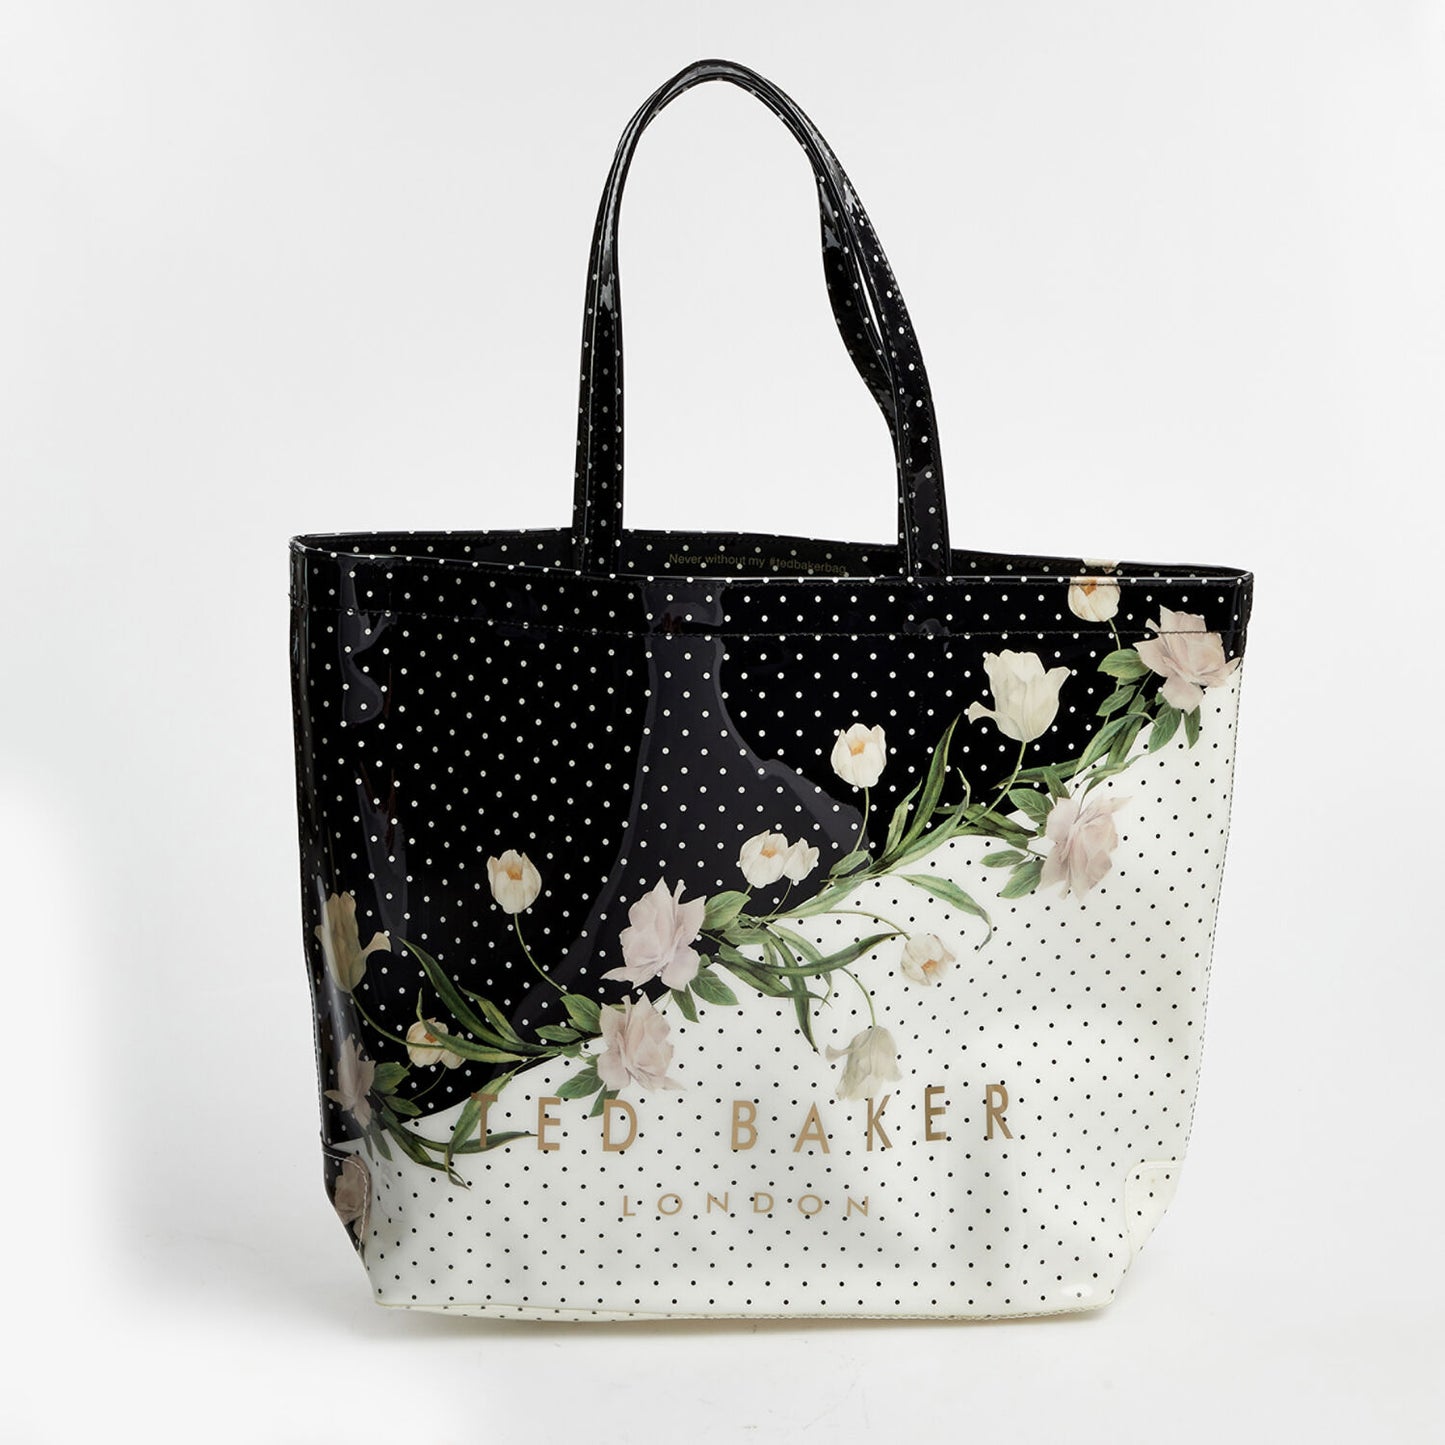 TED BAKER Black & White Polka Dot Floral Caitcon Tote Bag